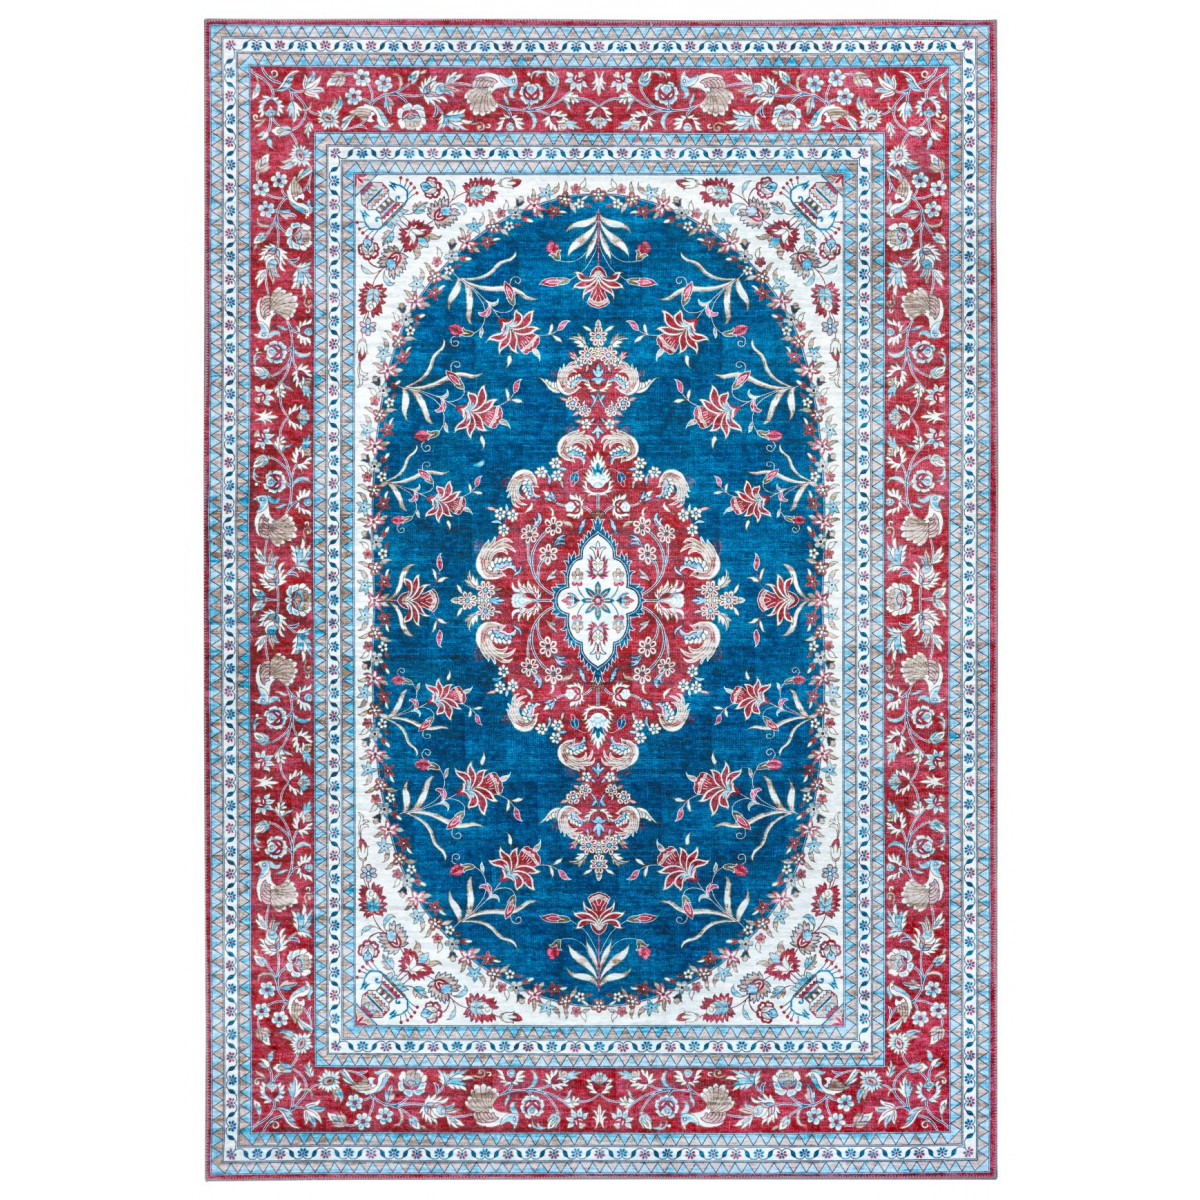 Kusový koberec Asmar 104966 ruby red, blue, light blue